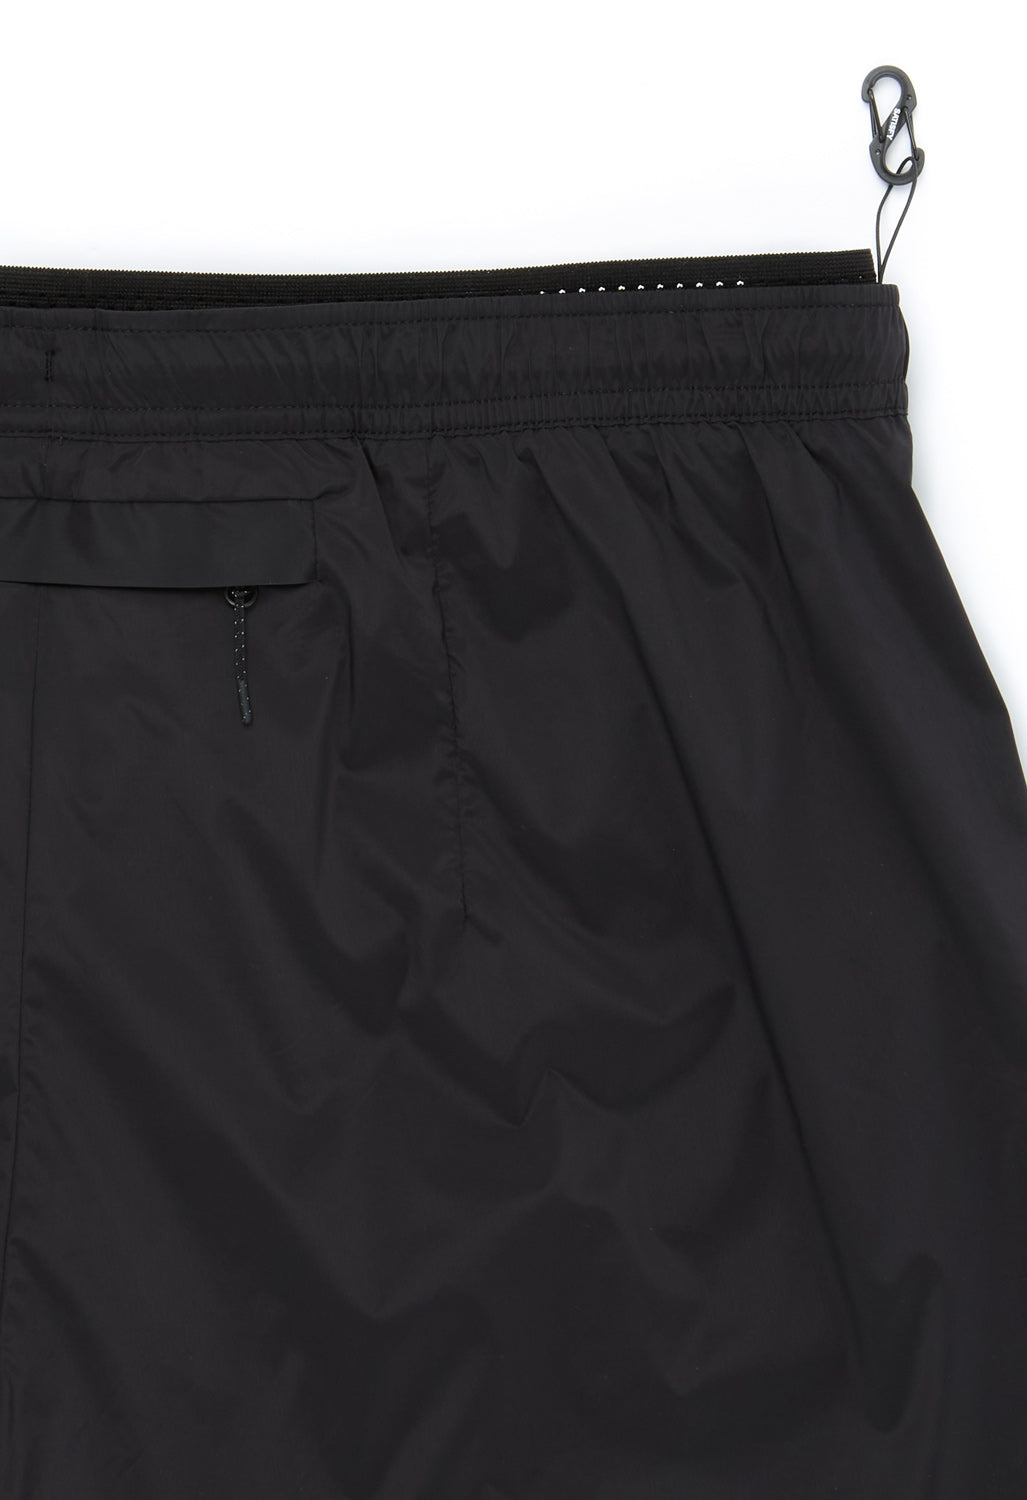 Satisfy Men's TechSilk 5" Shorts - Black